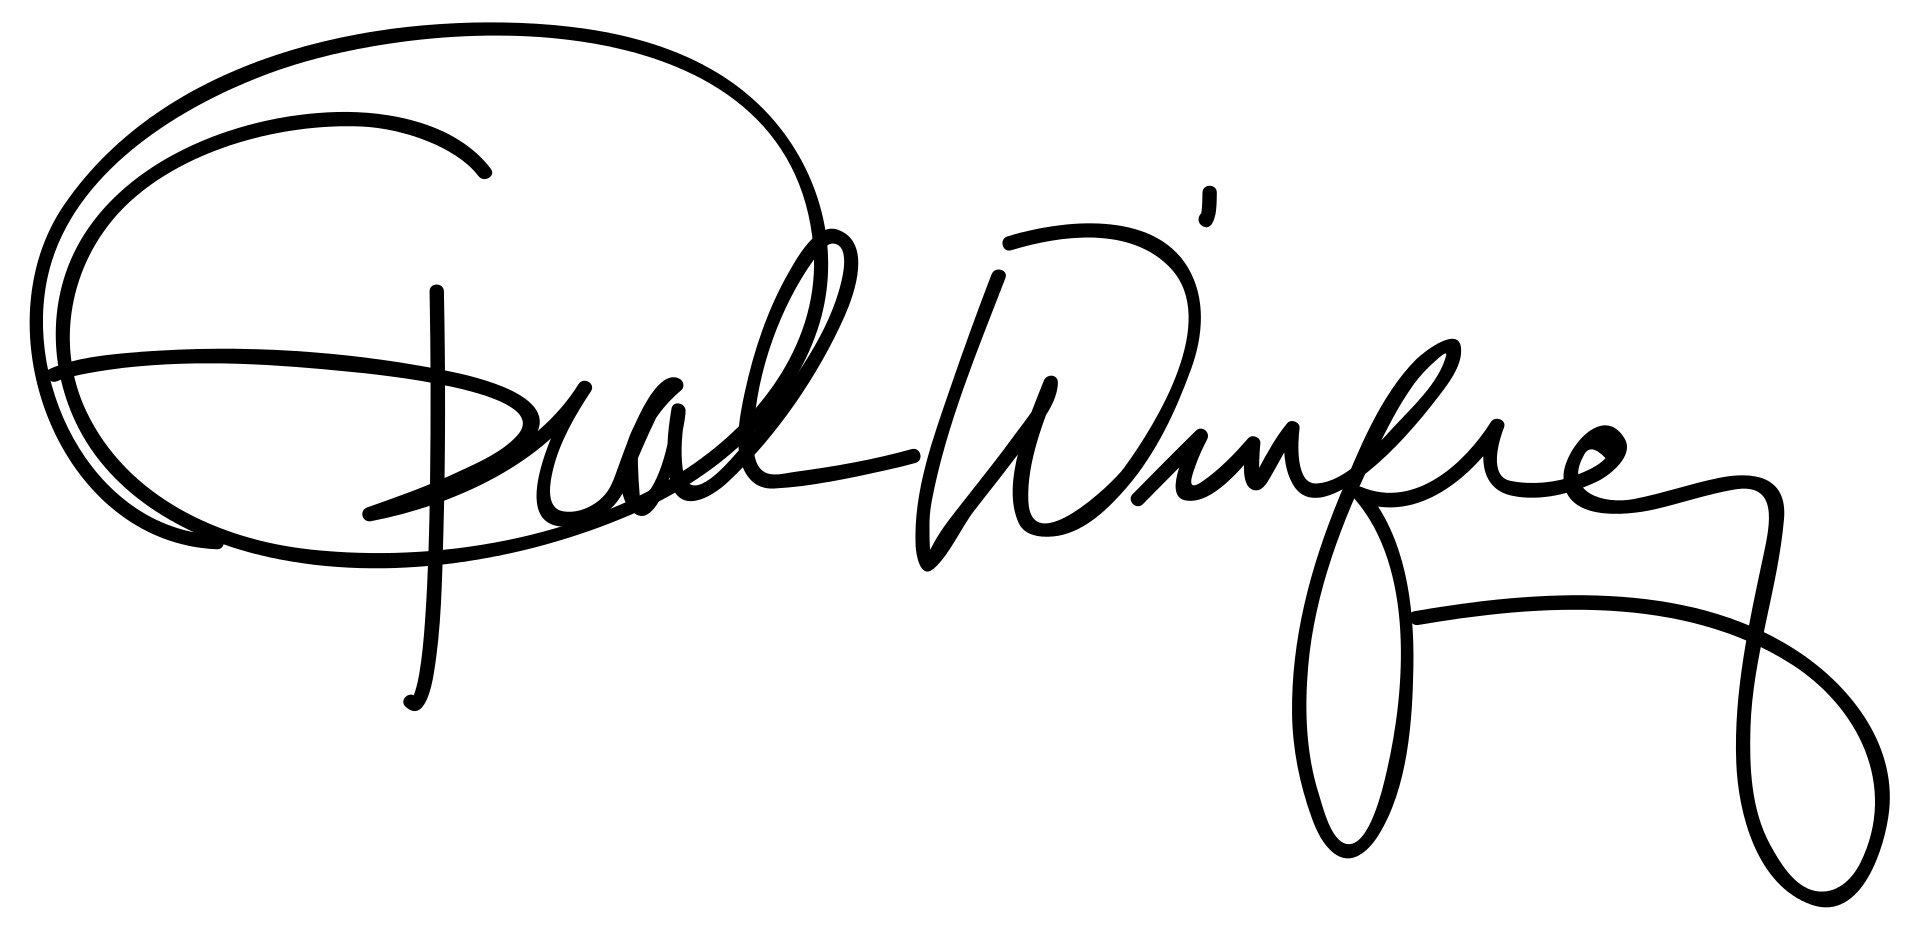 official signature of celebrity Oprah